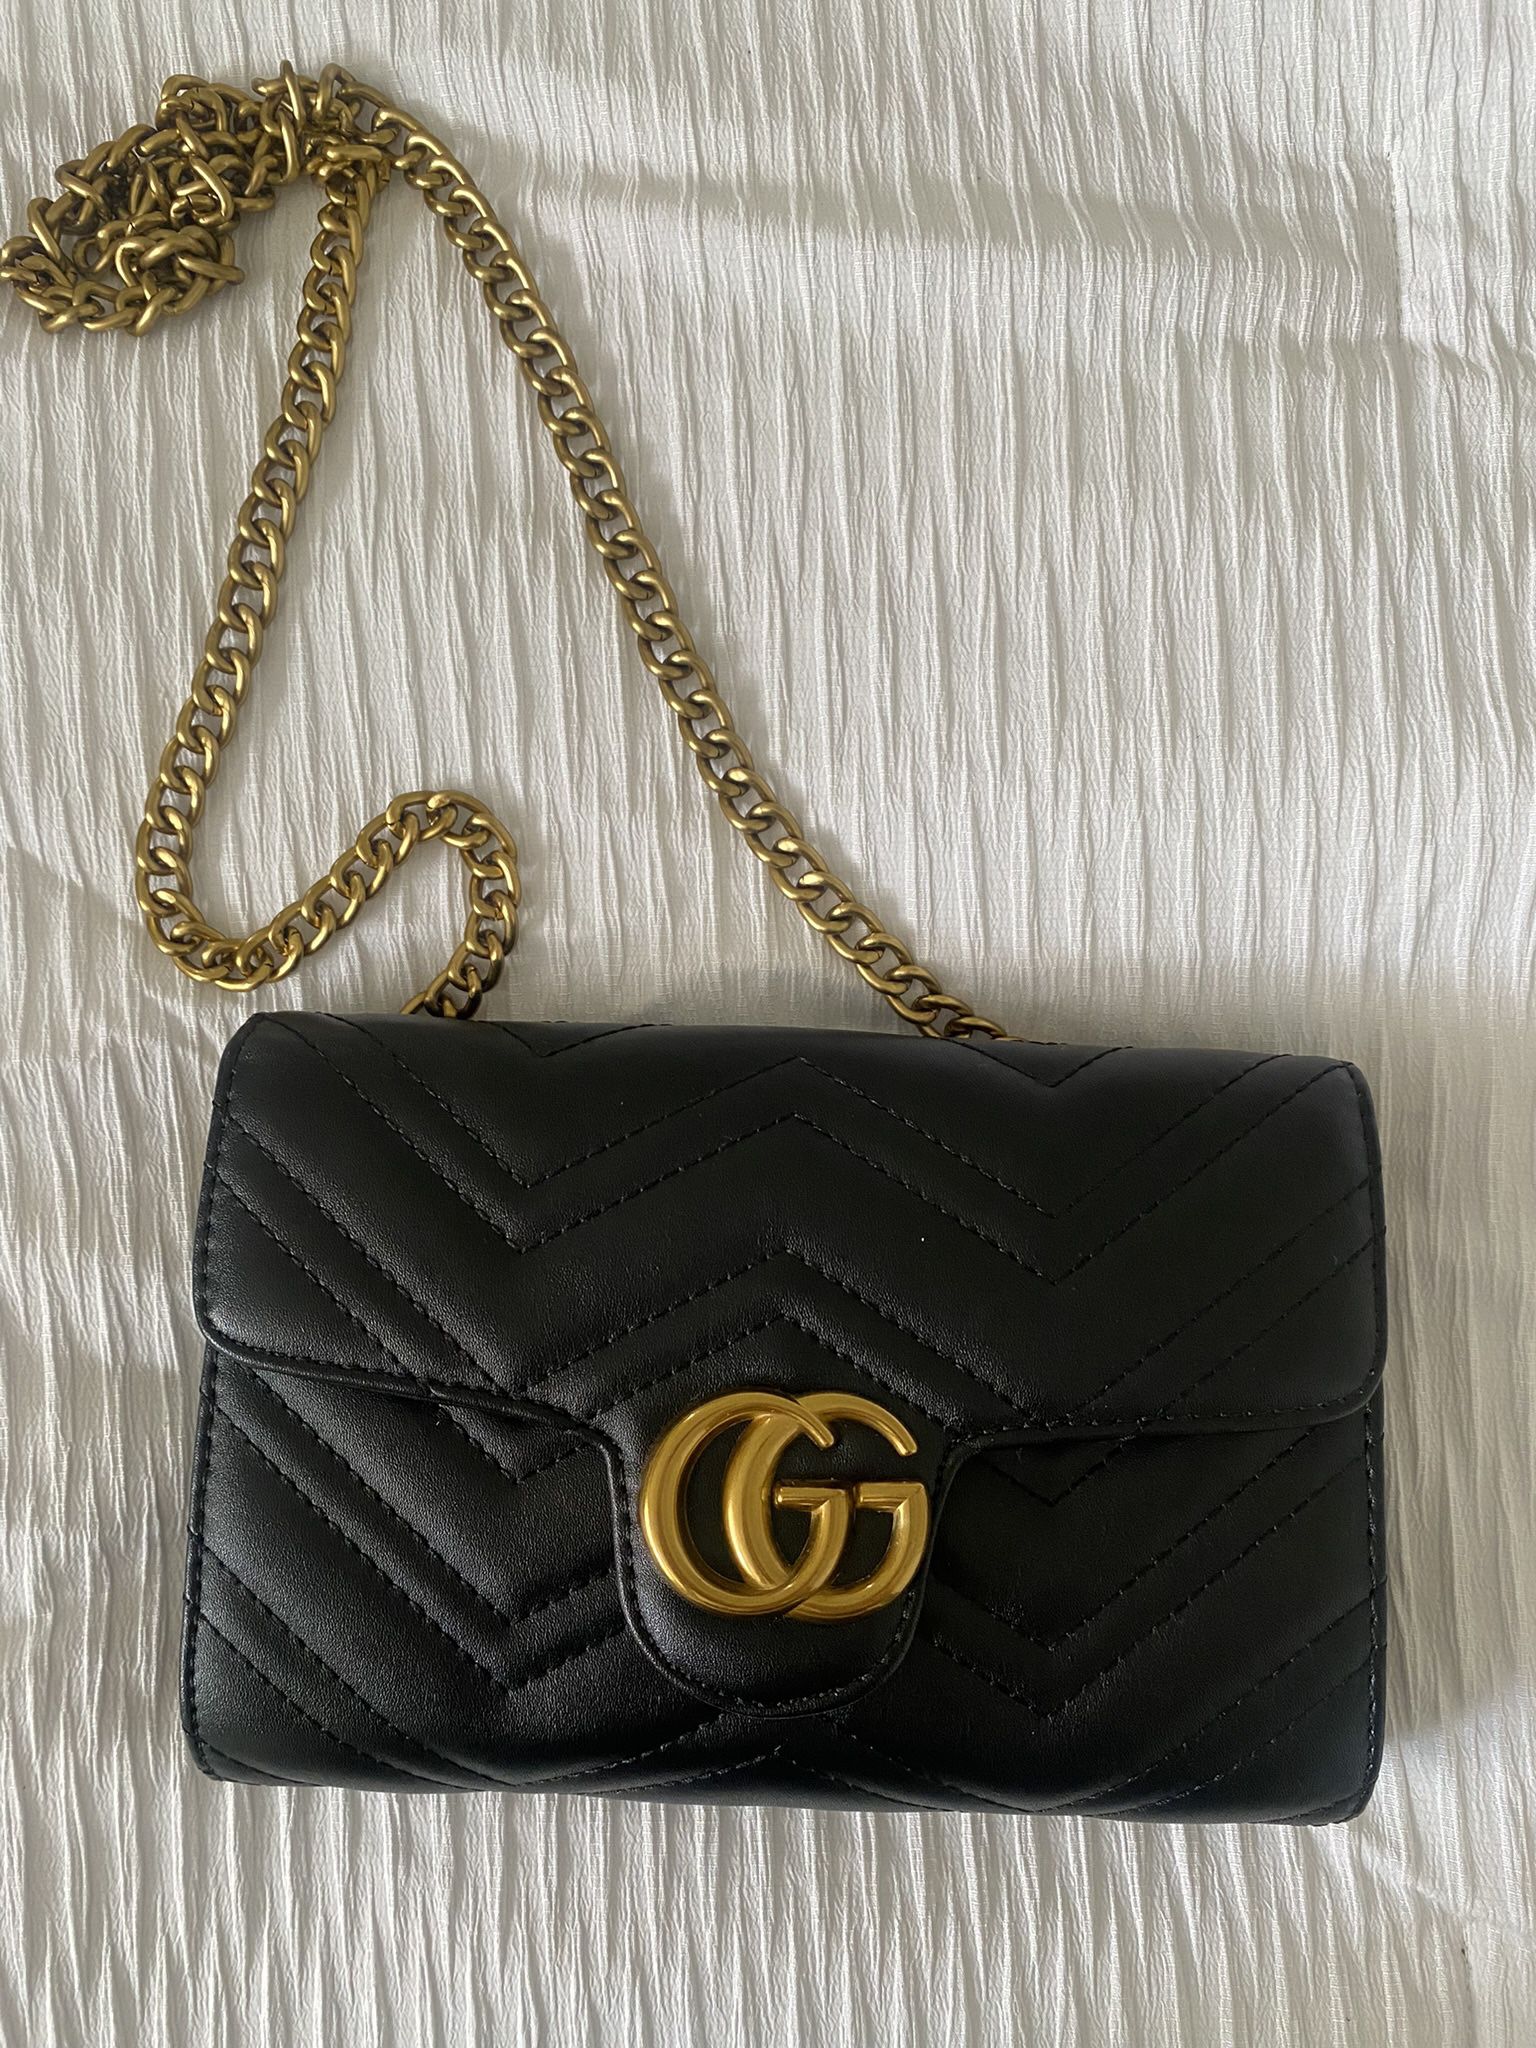 Black GG Marmont Envelope bag